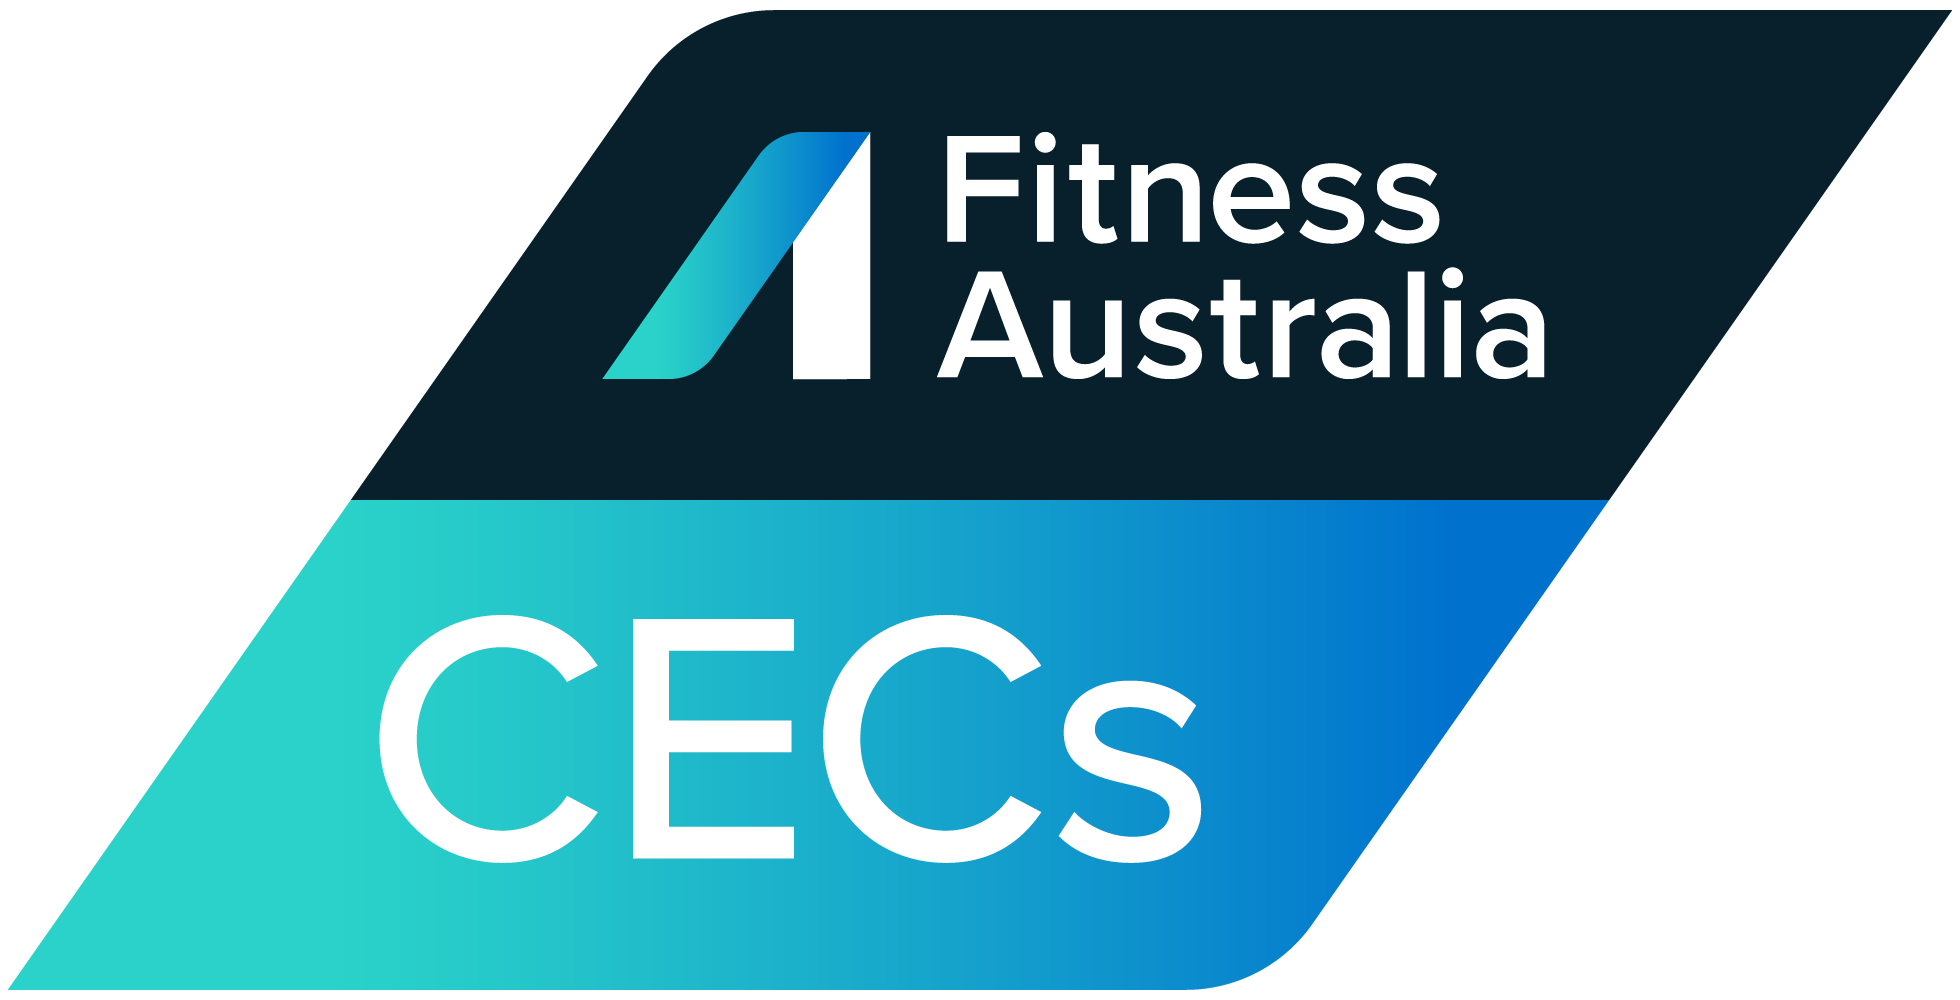 CECs Fitness Australia